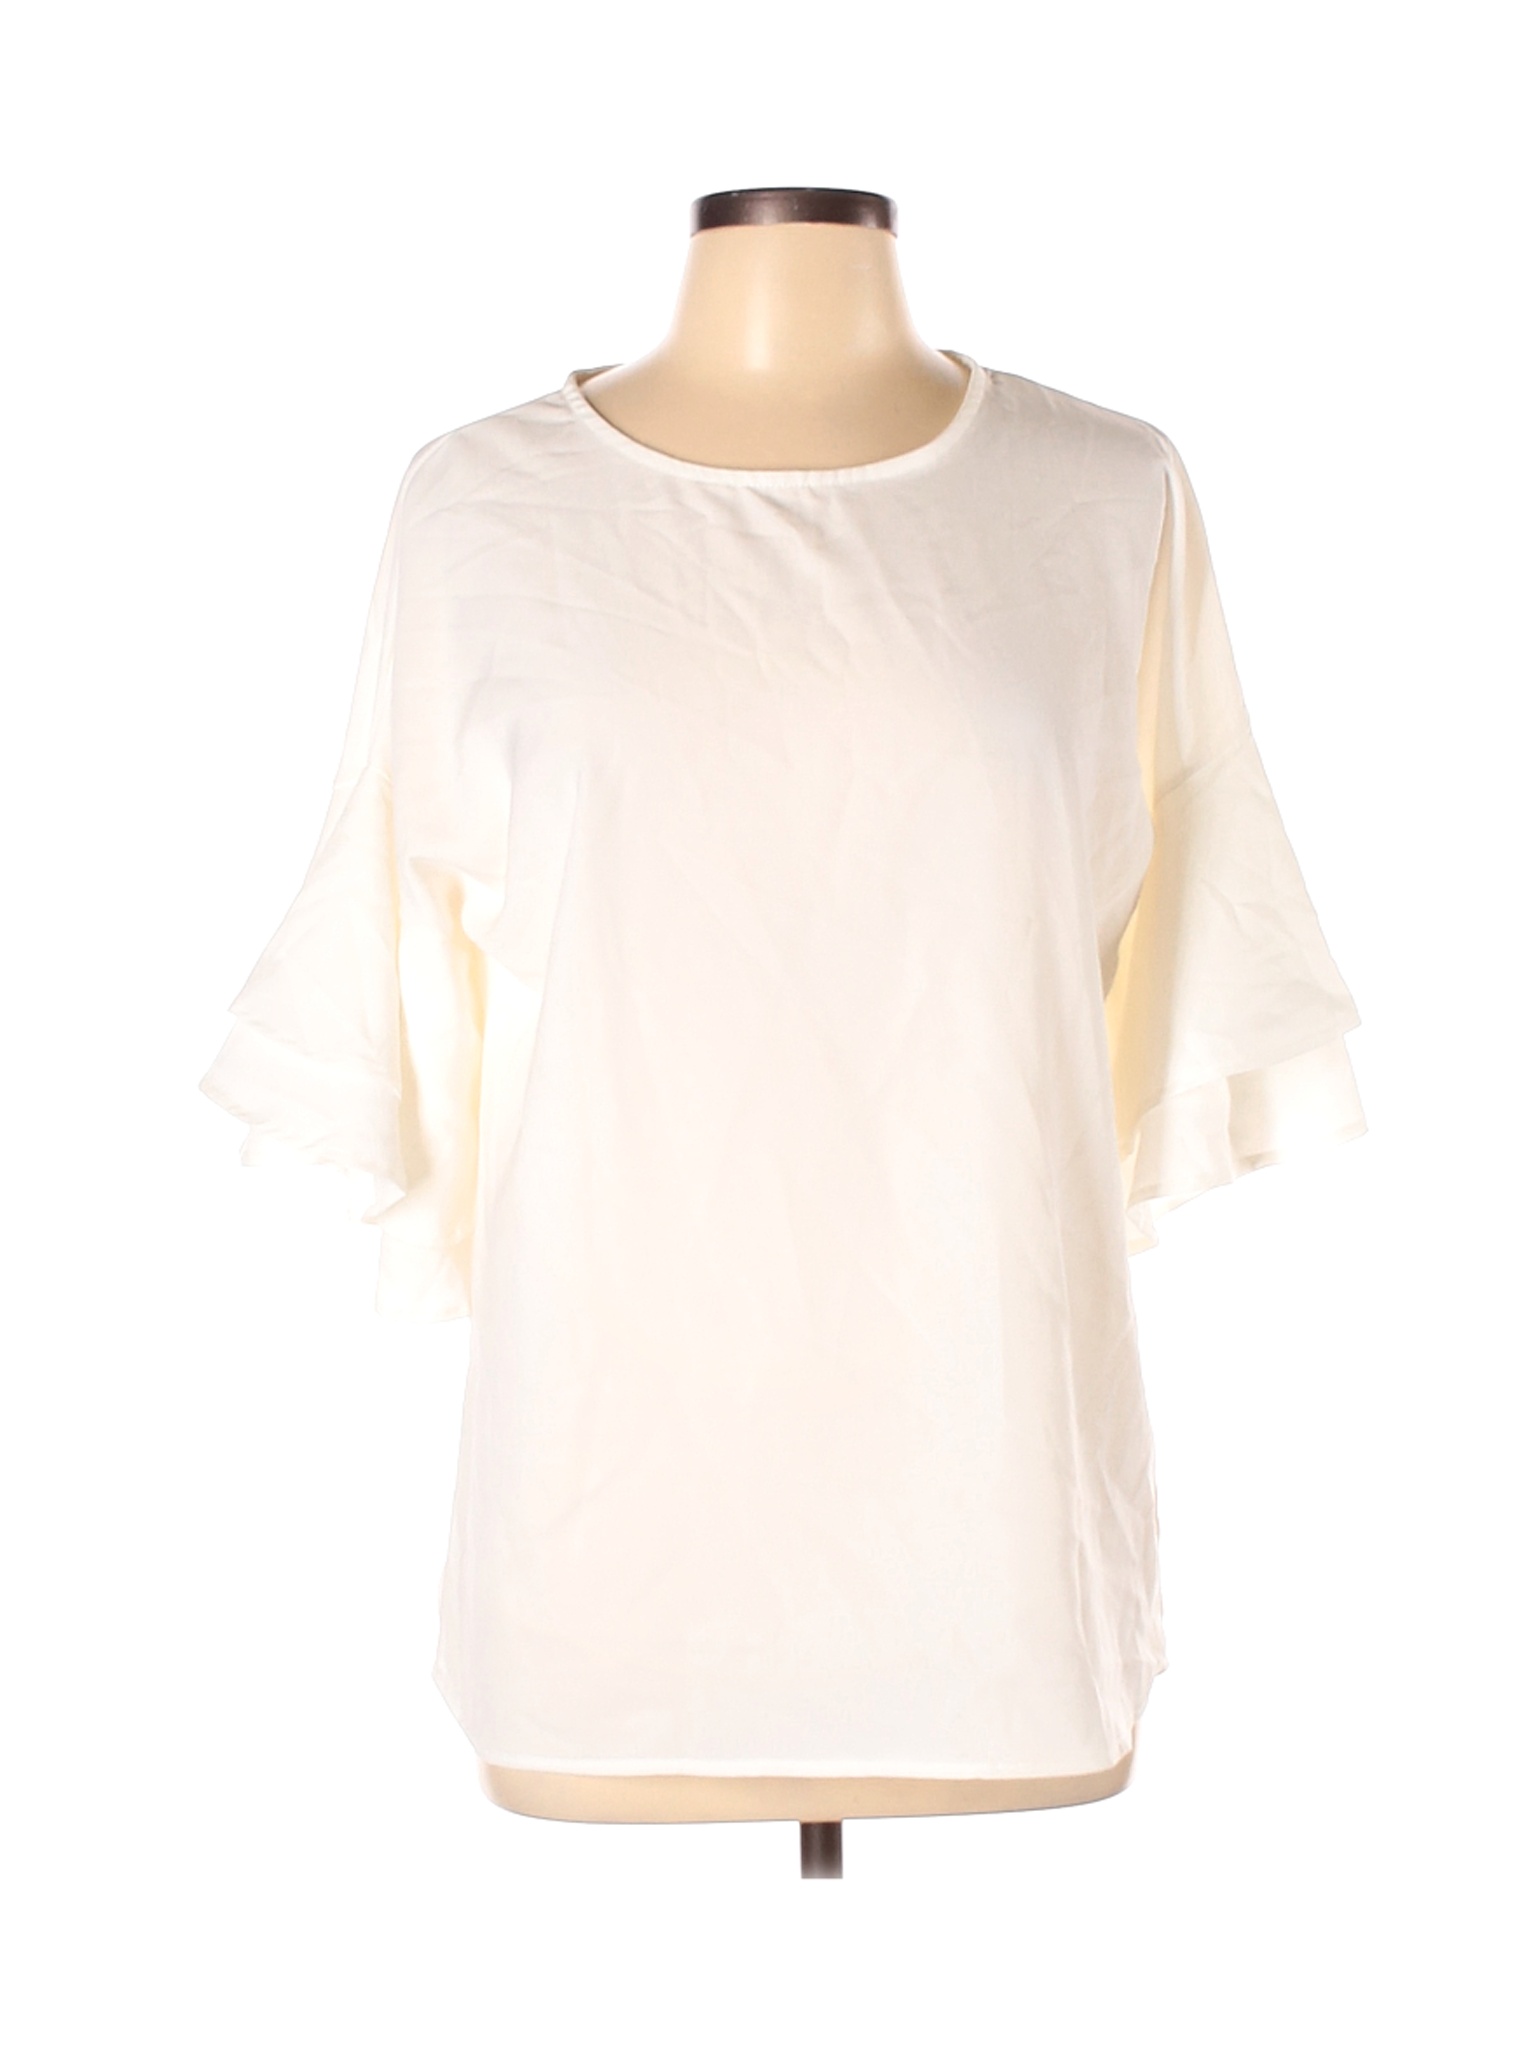 Unbranded Women Ivory 3/4 Sleeve Blouse L | eBay